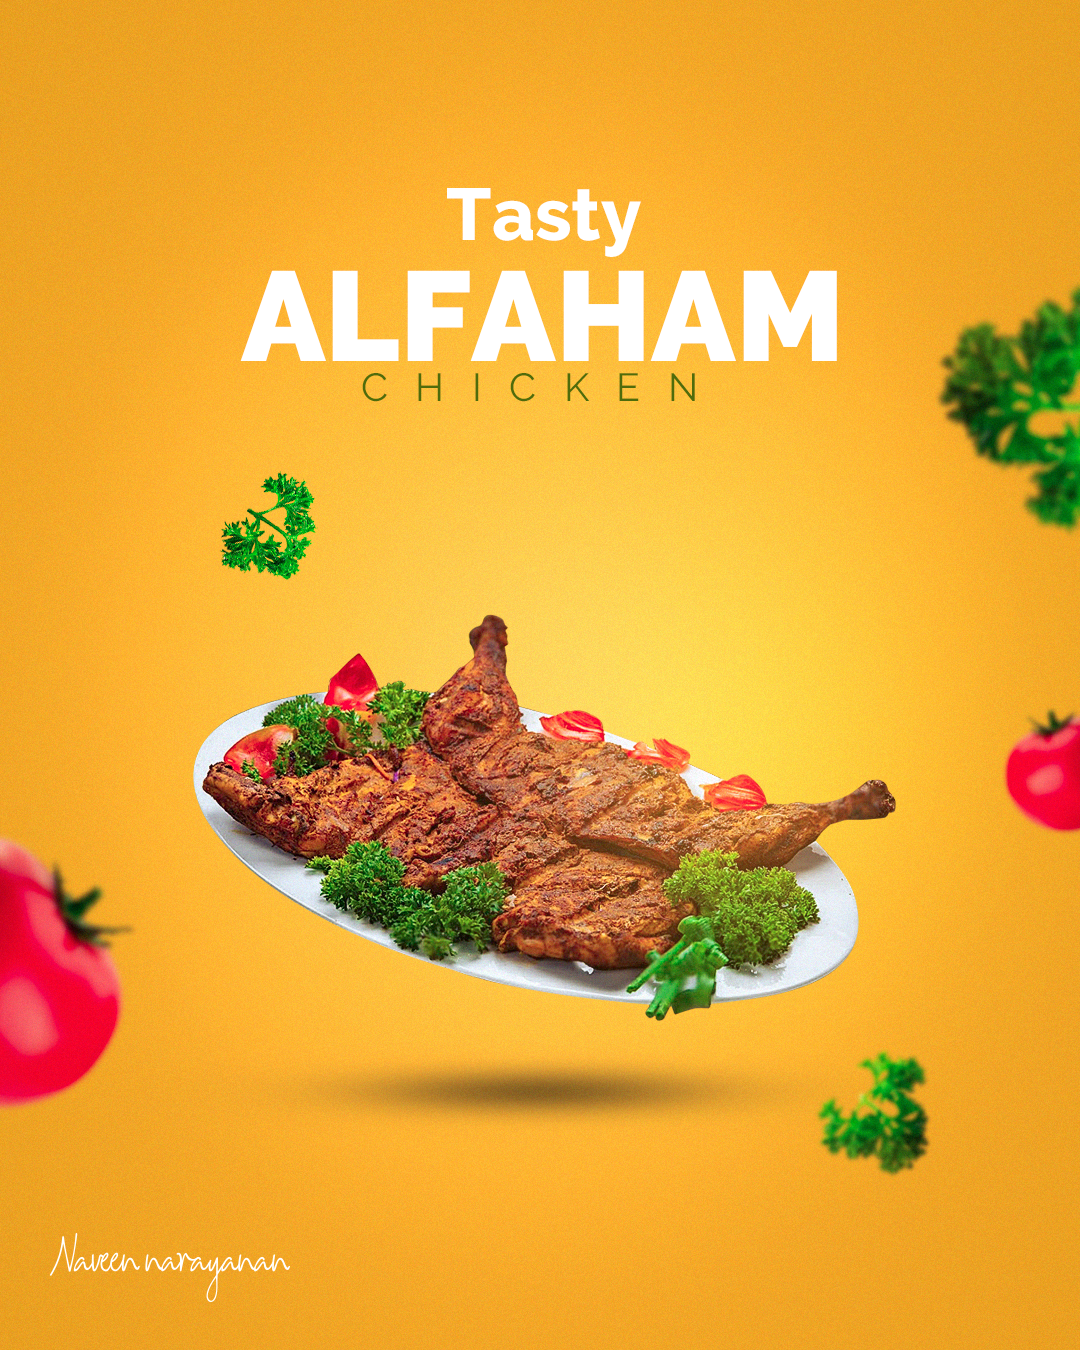 Alfaham Chicken. Food design, Food photography, Food